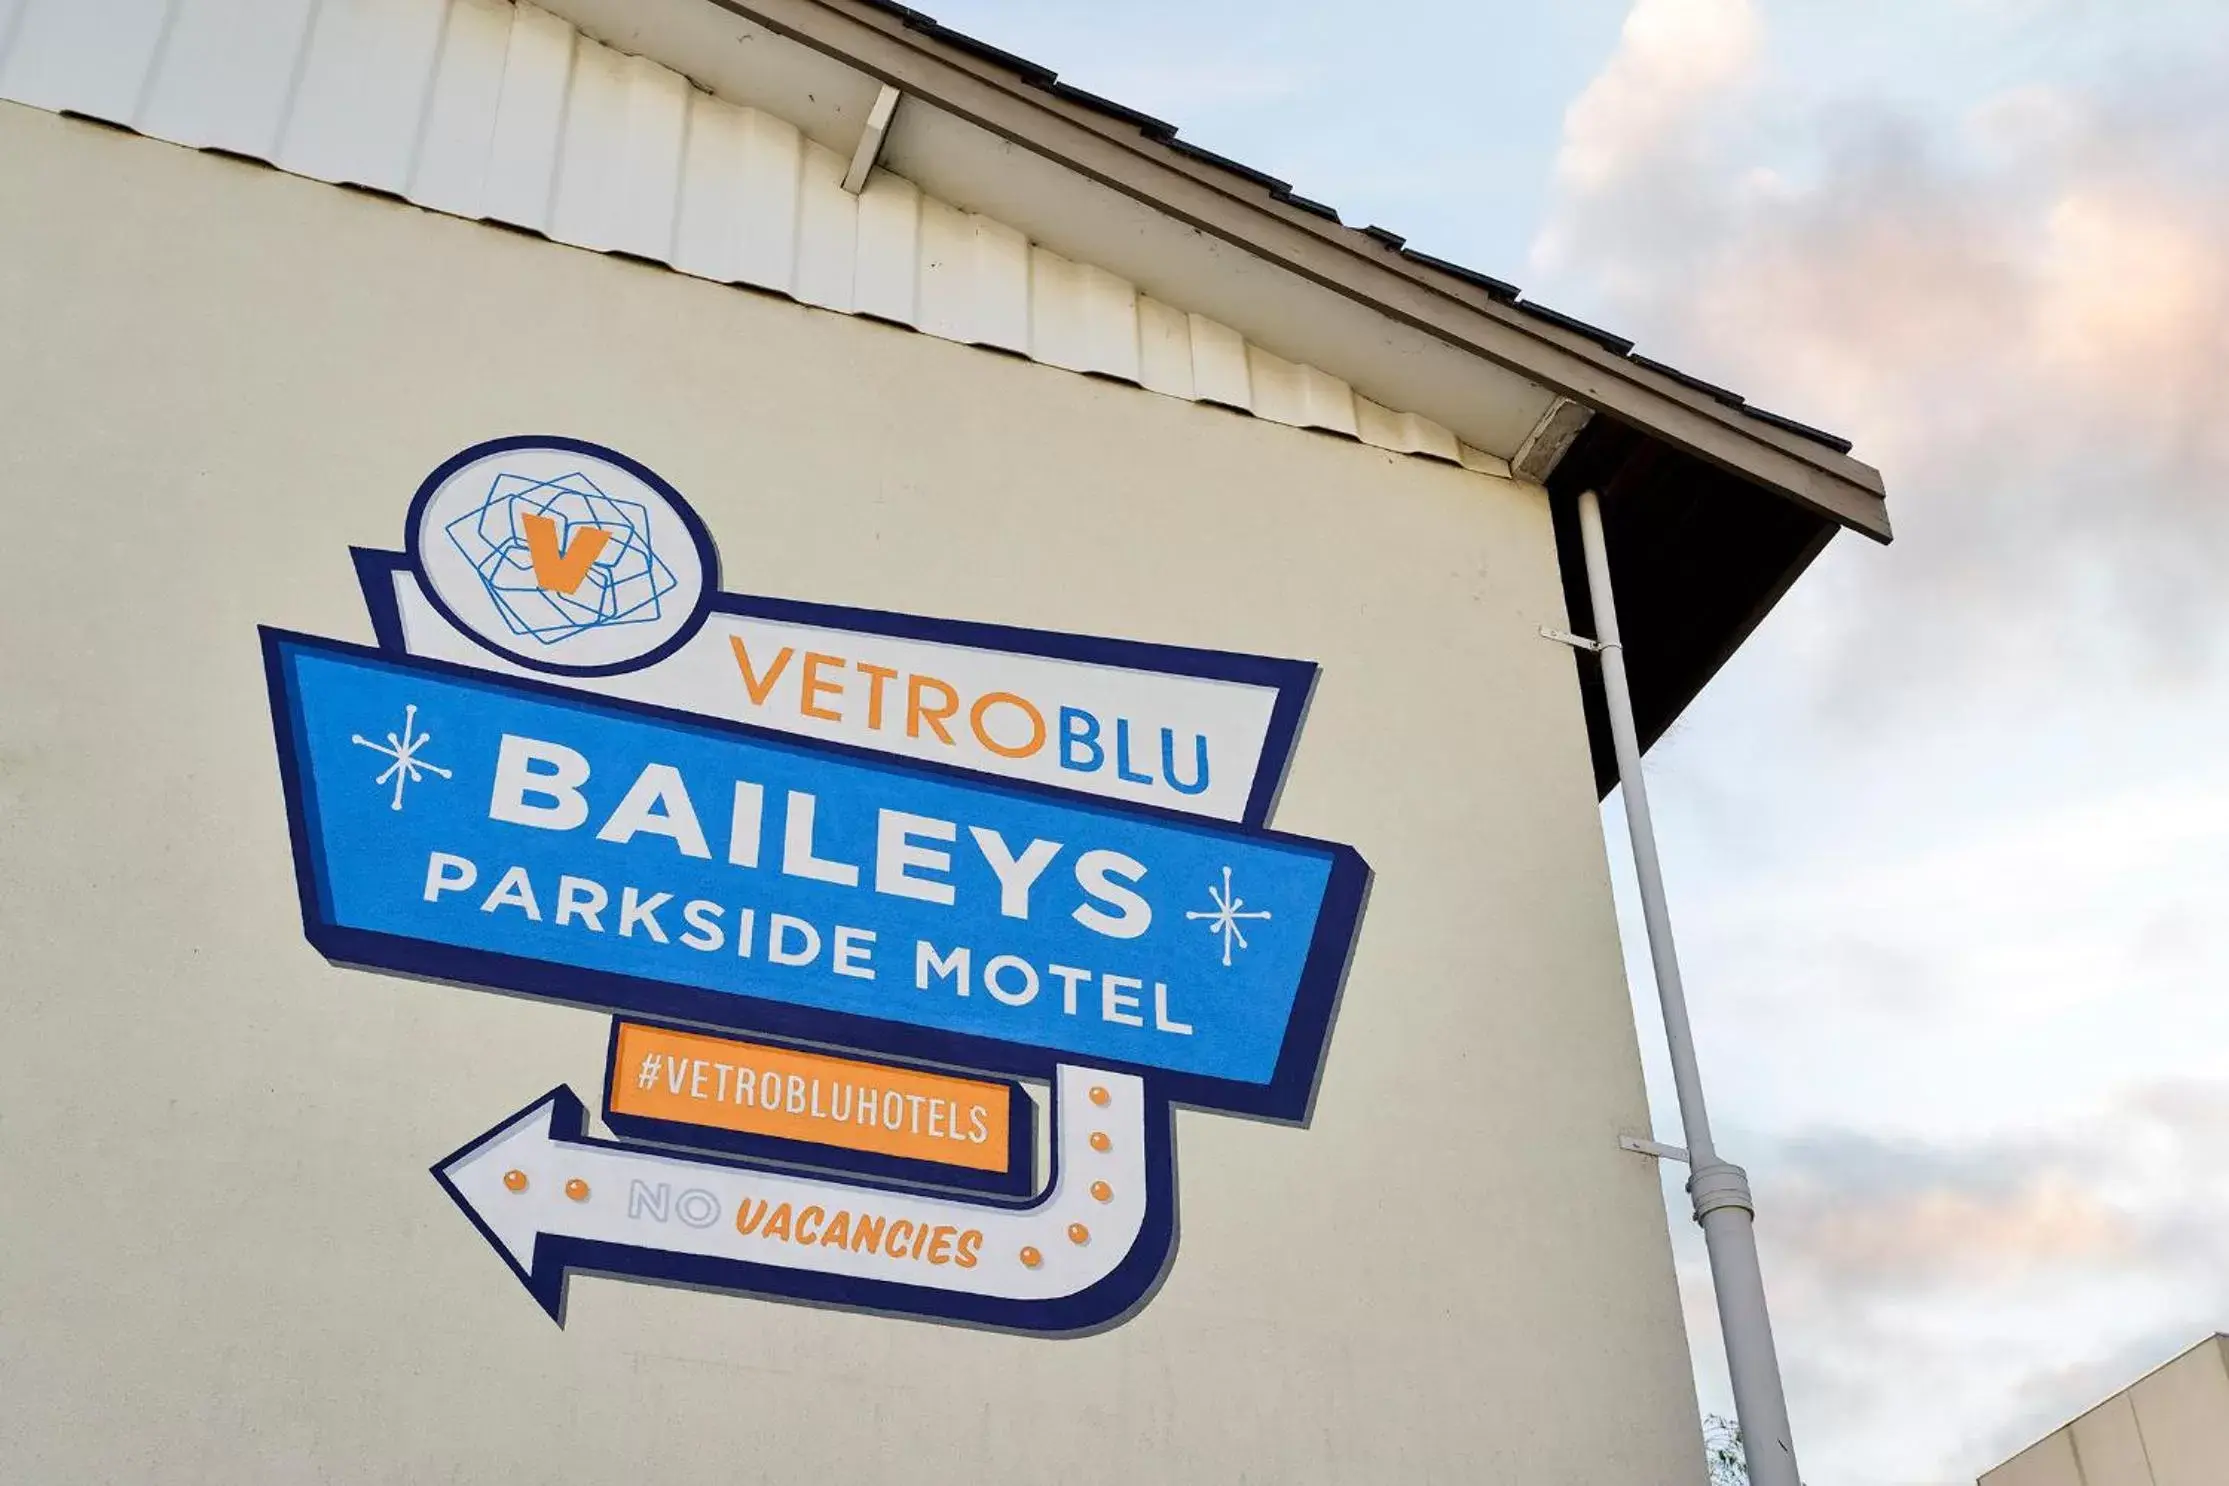 Property building in Baileys Parkside Motel by VetroBlu